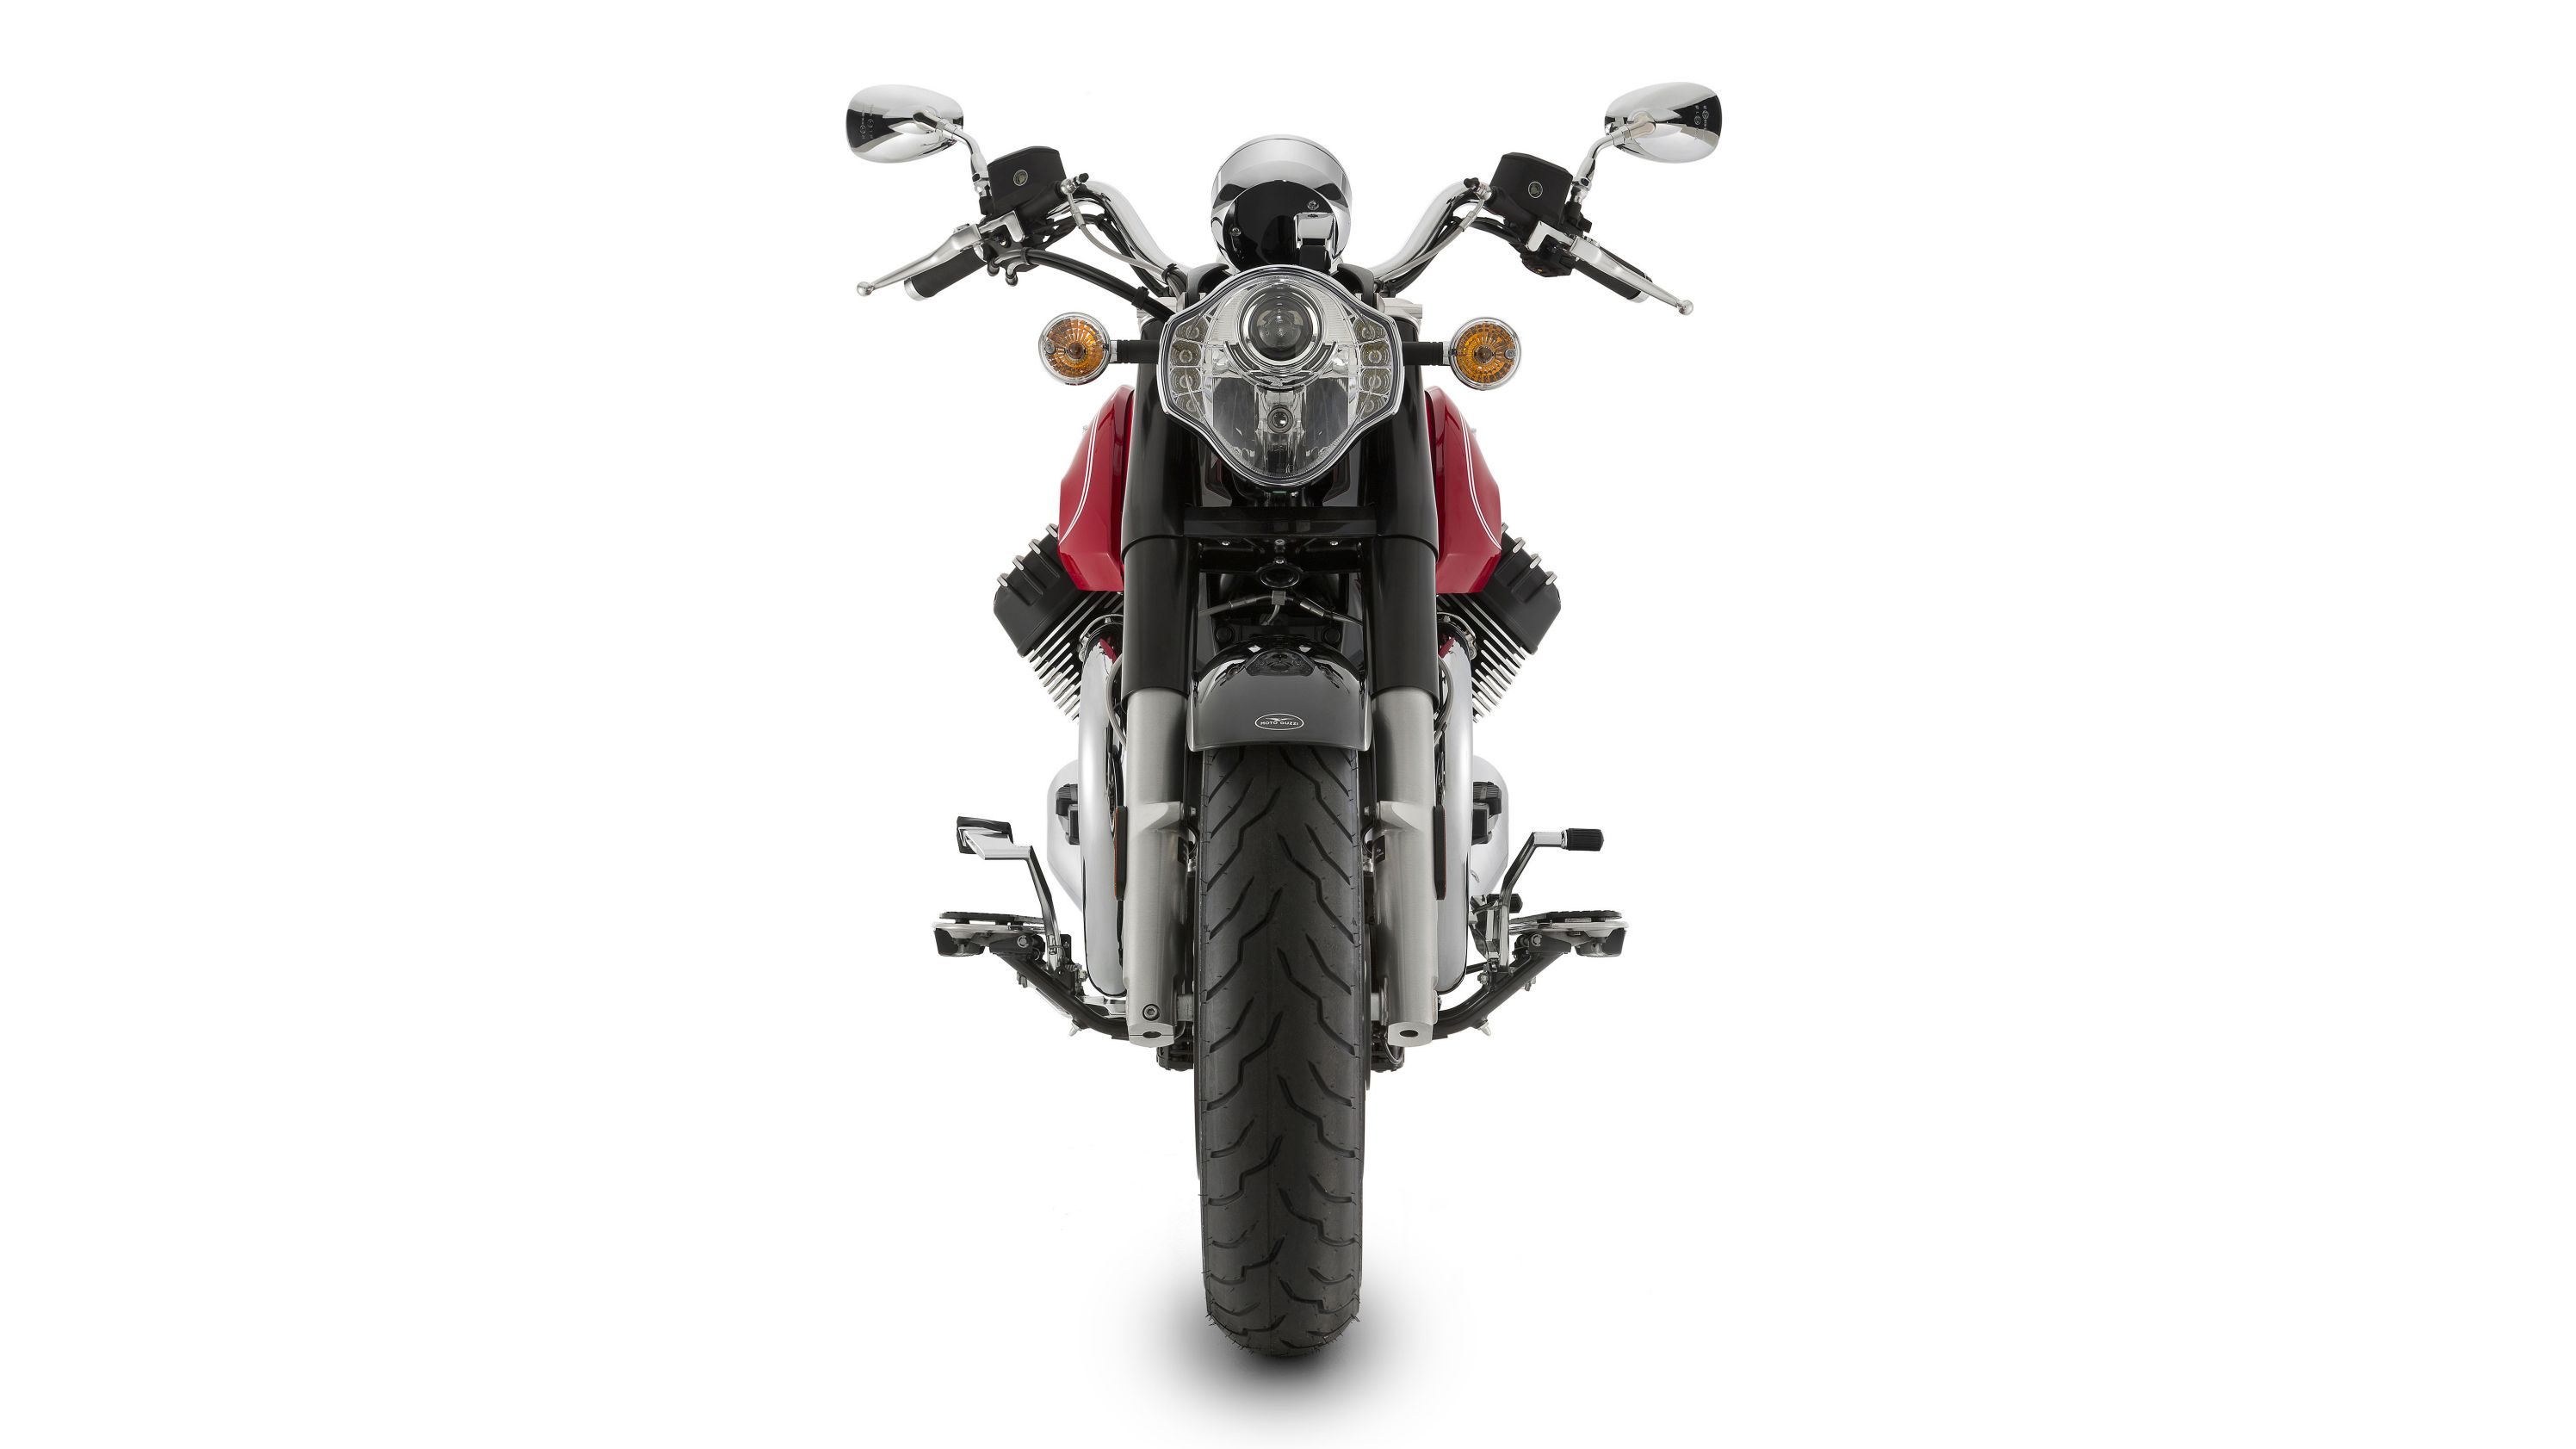 2016 - 2019 Moto Guzzi Eldorado